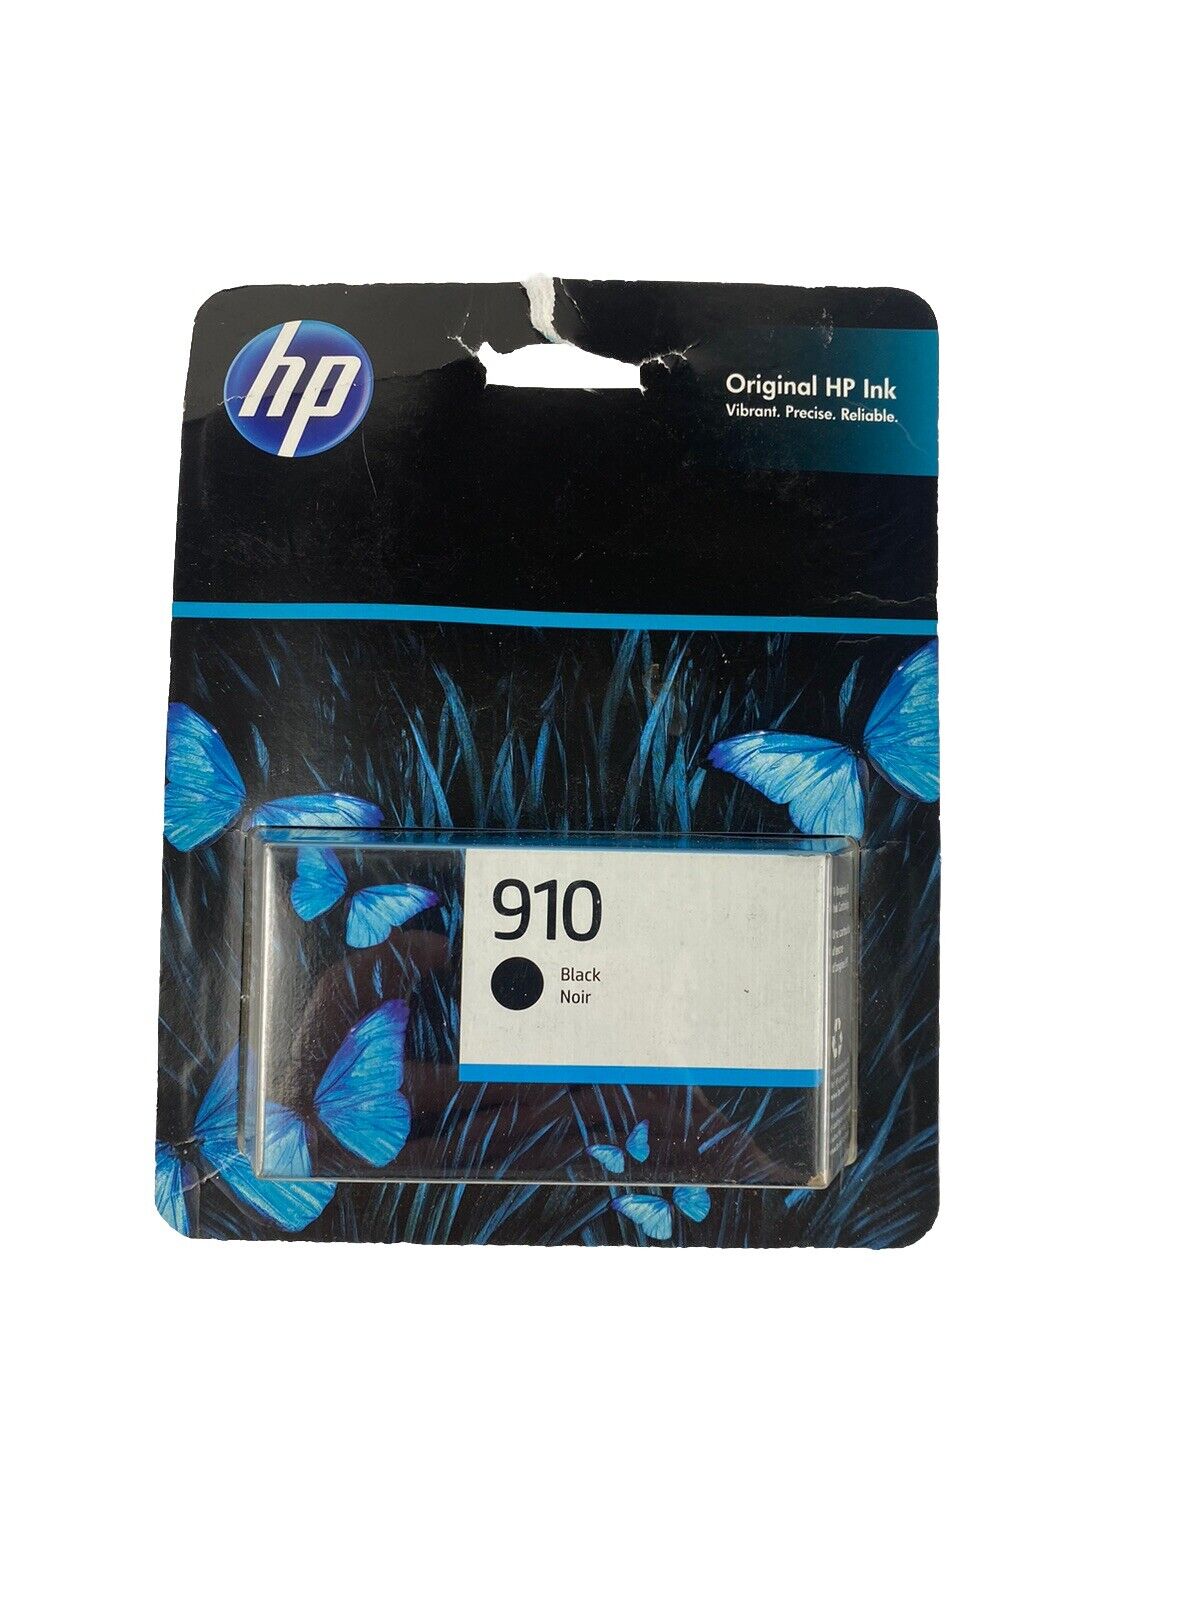 HP 910 Black Noir Genuine Original - Exp. 12/2024 - New/Sealed